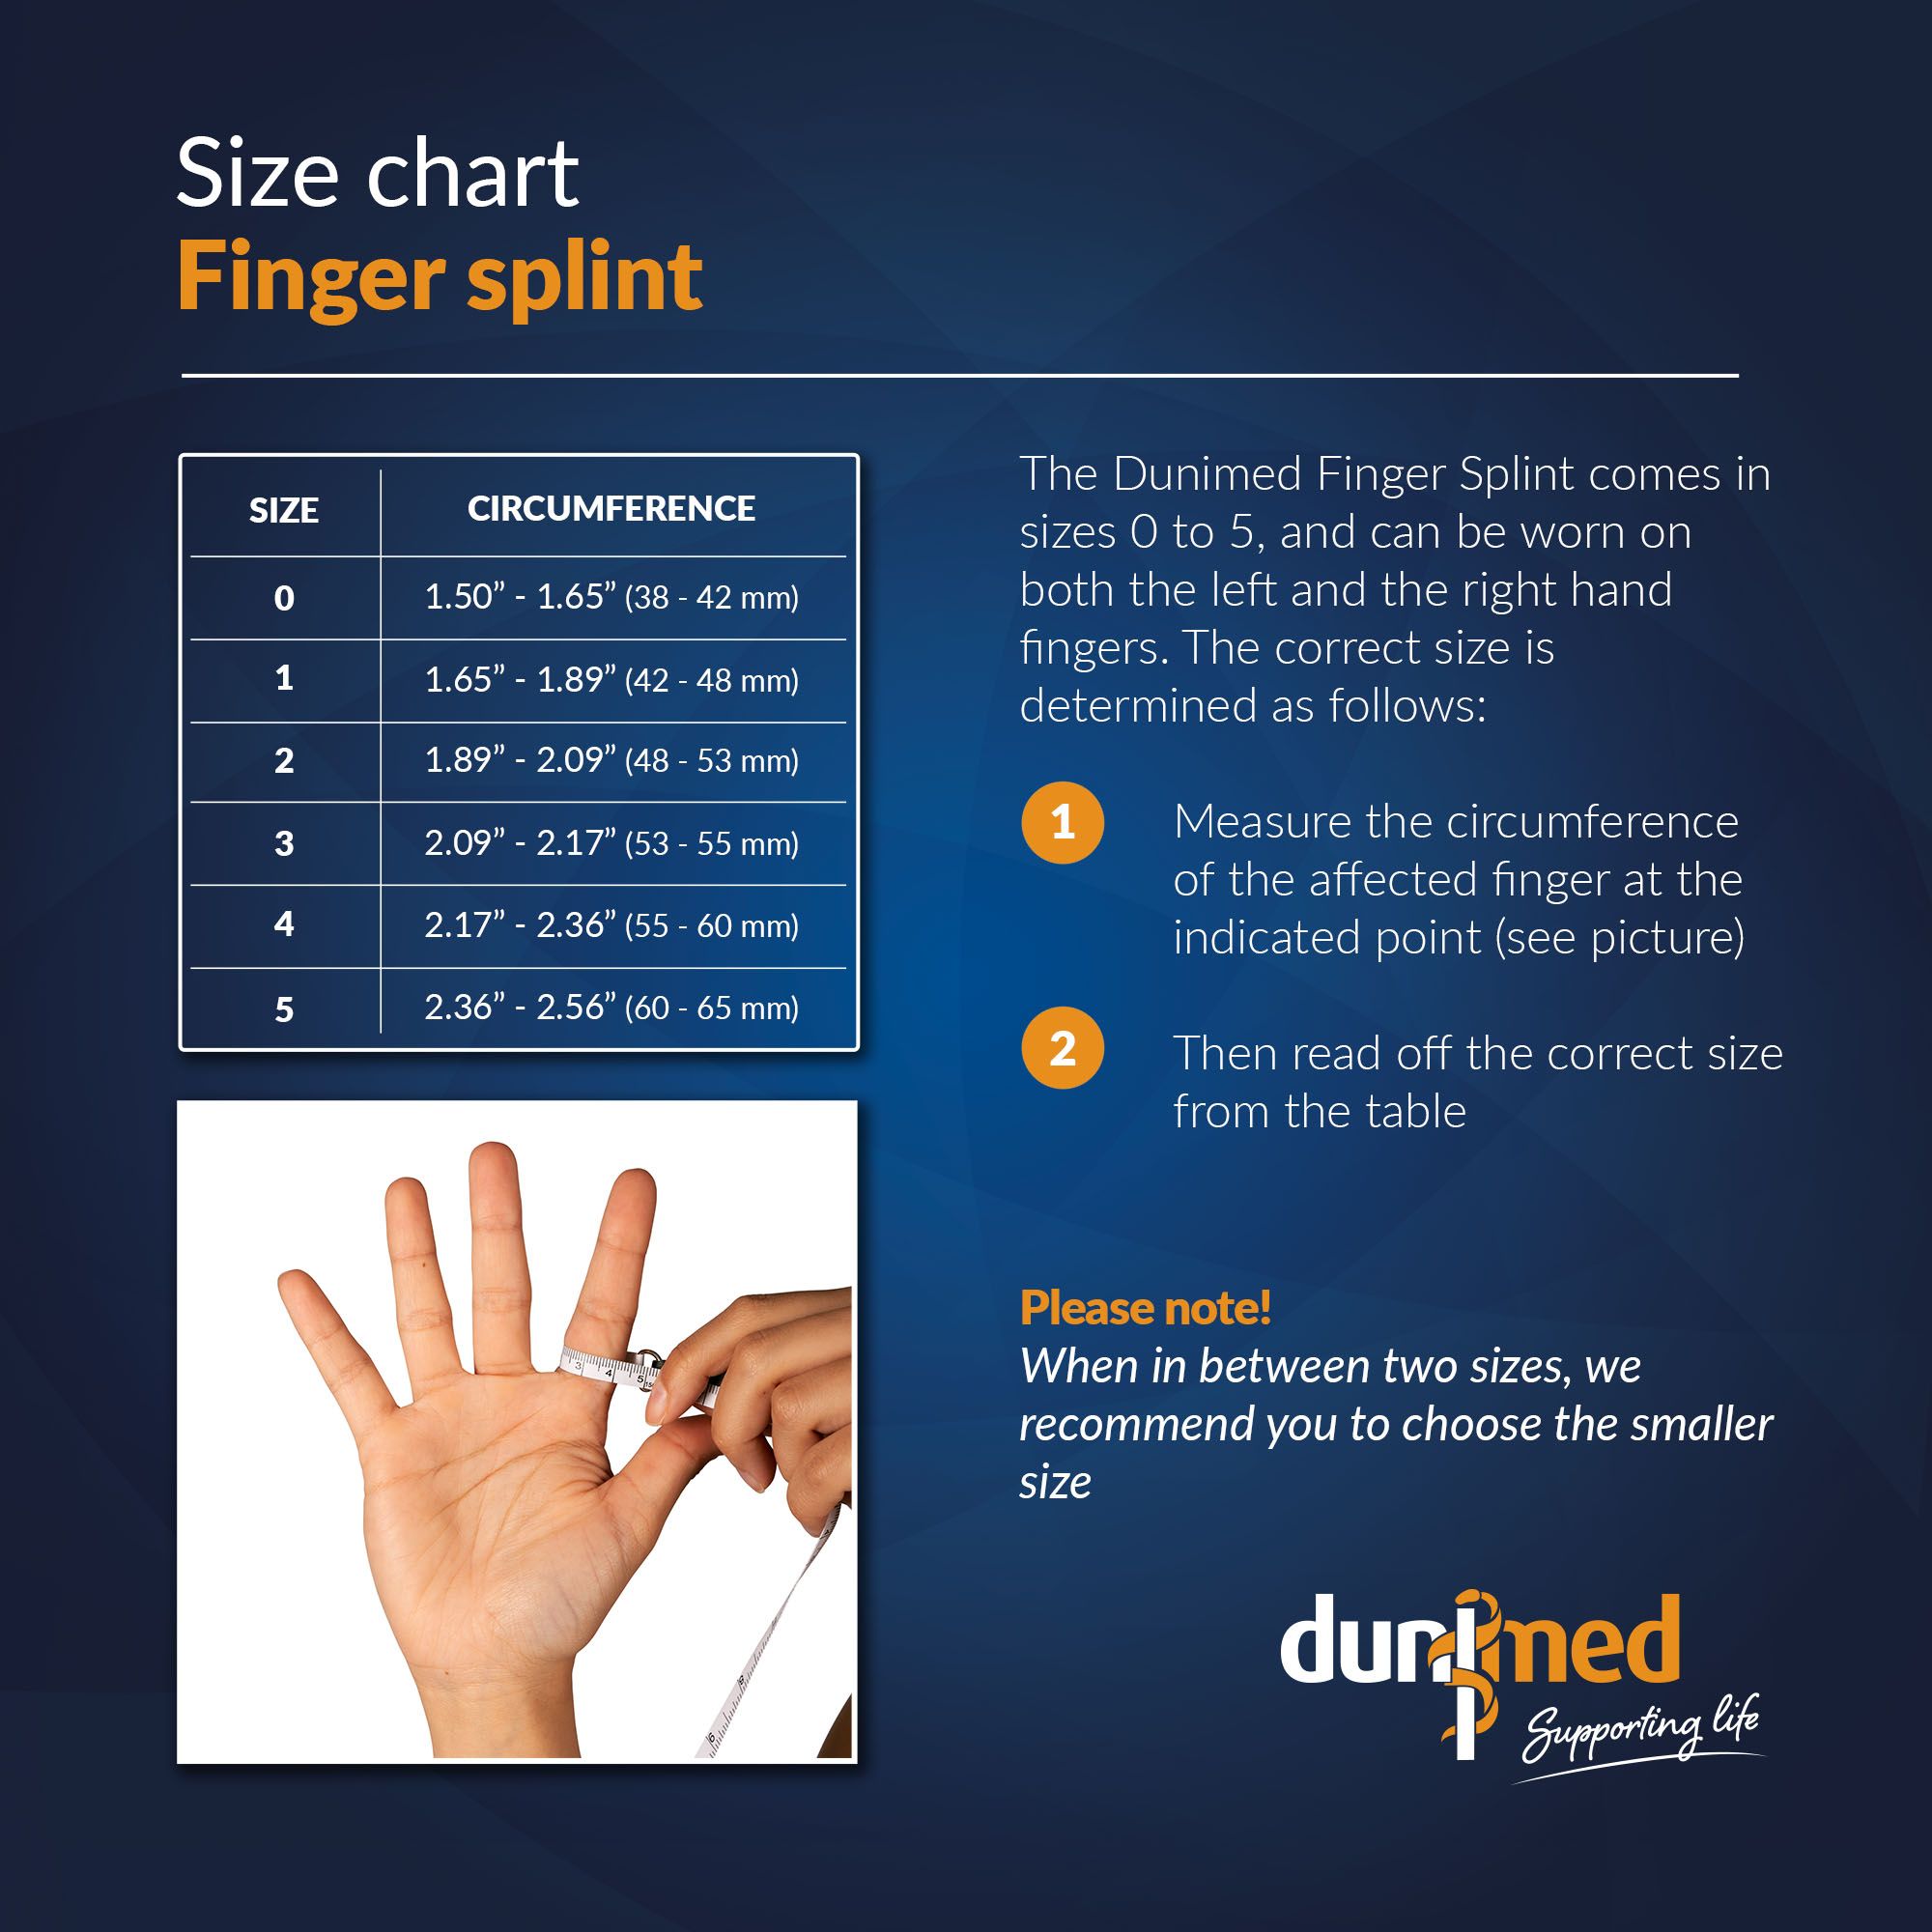 Size Chart Dunimed Finger Splint